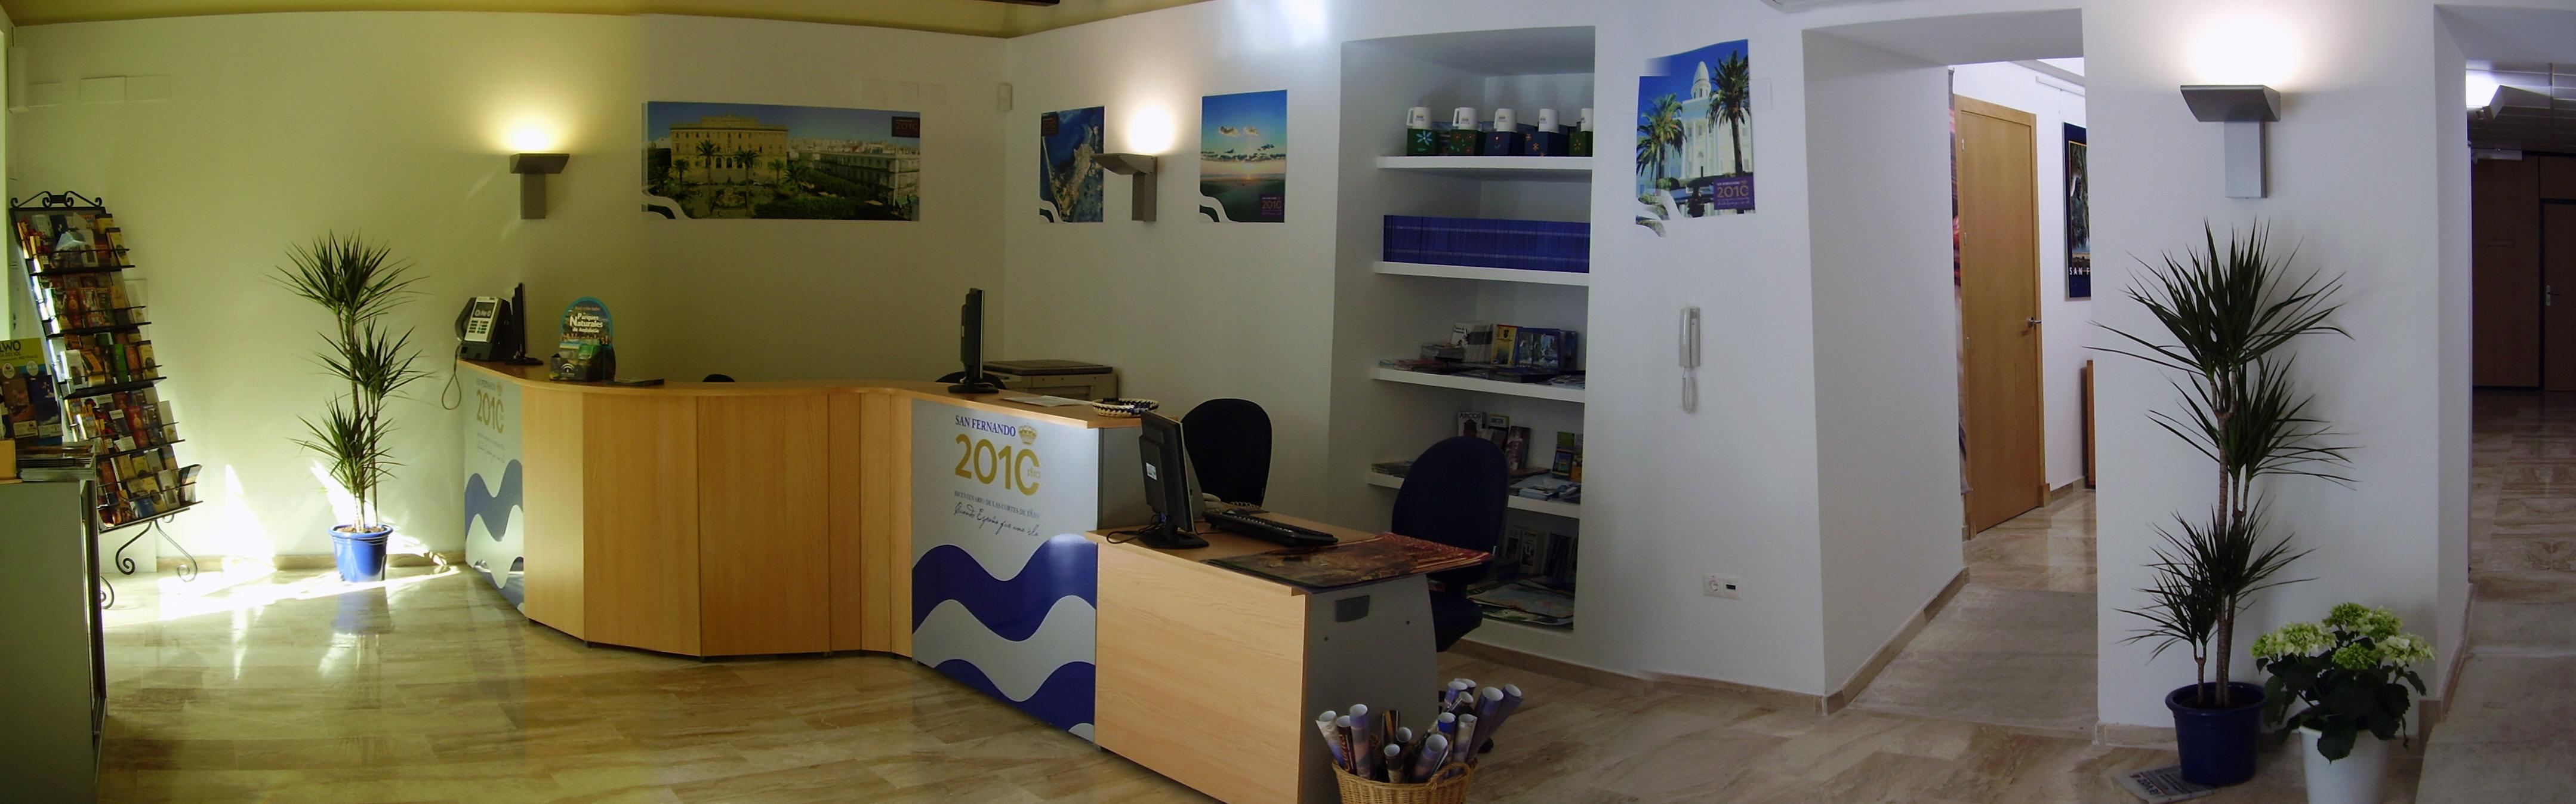 Oficina de Turismo de San Fernando